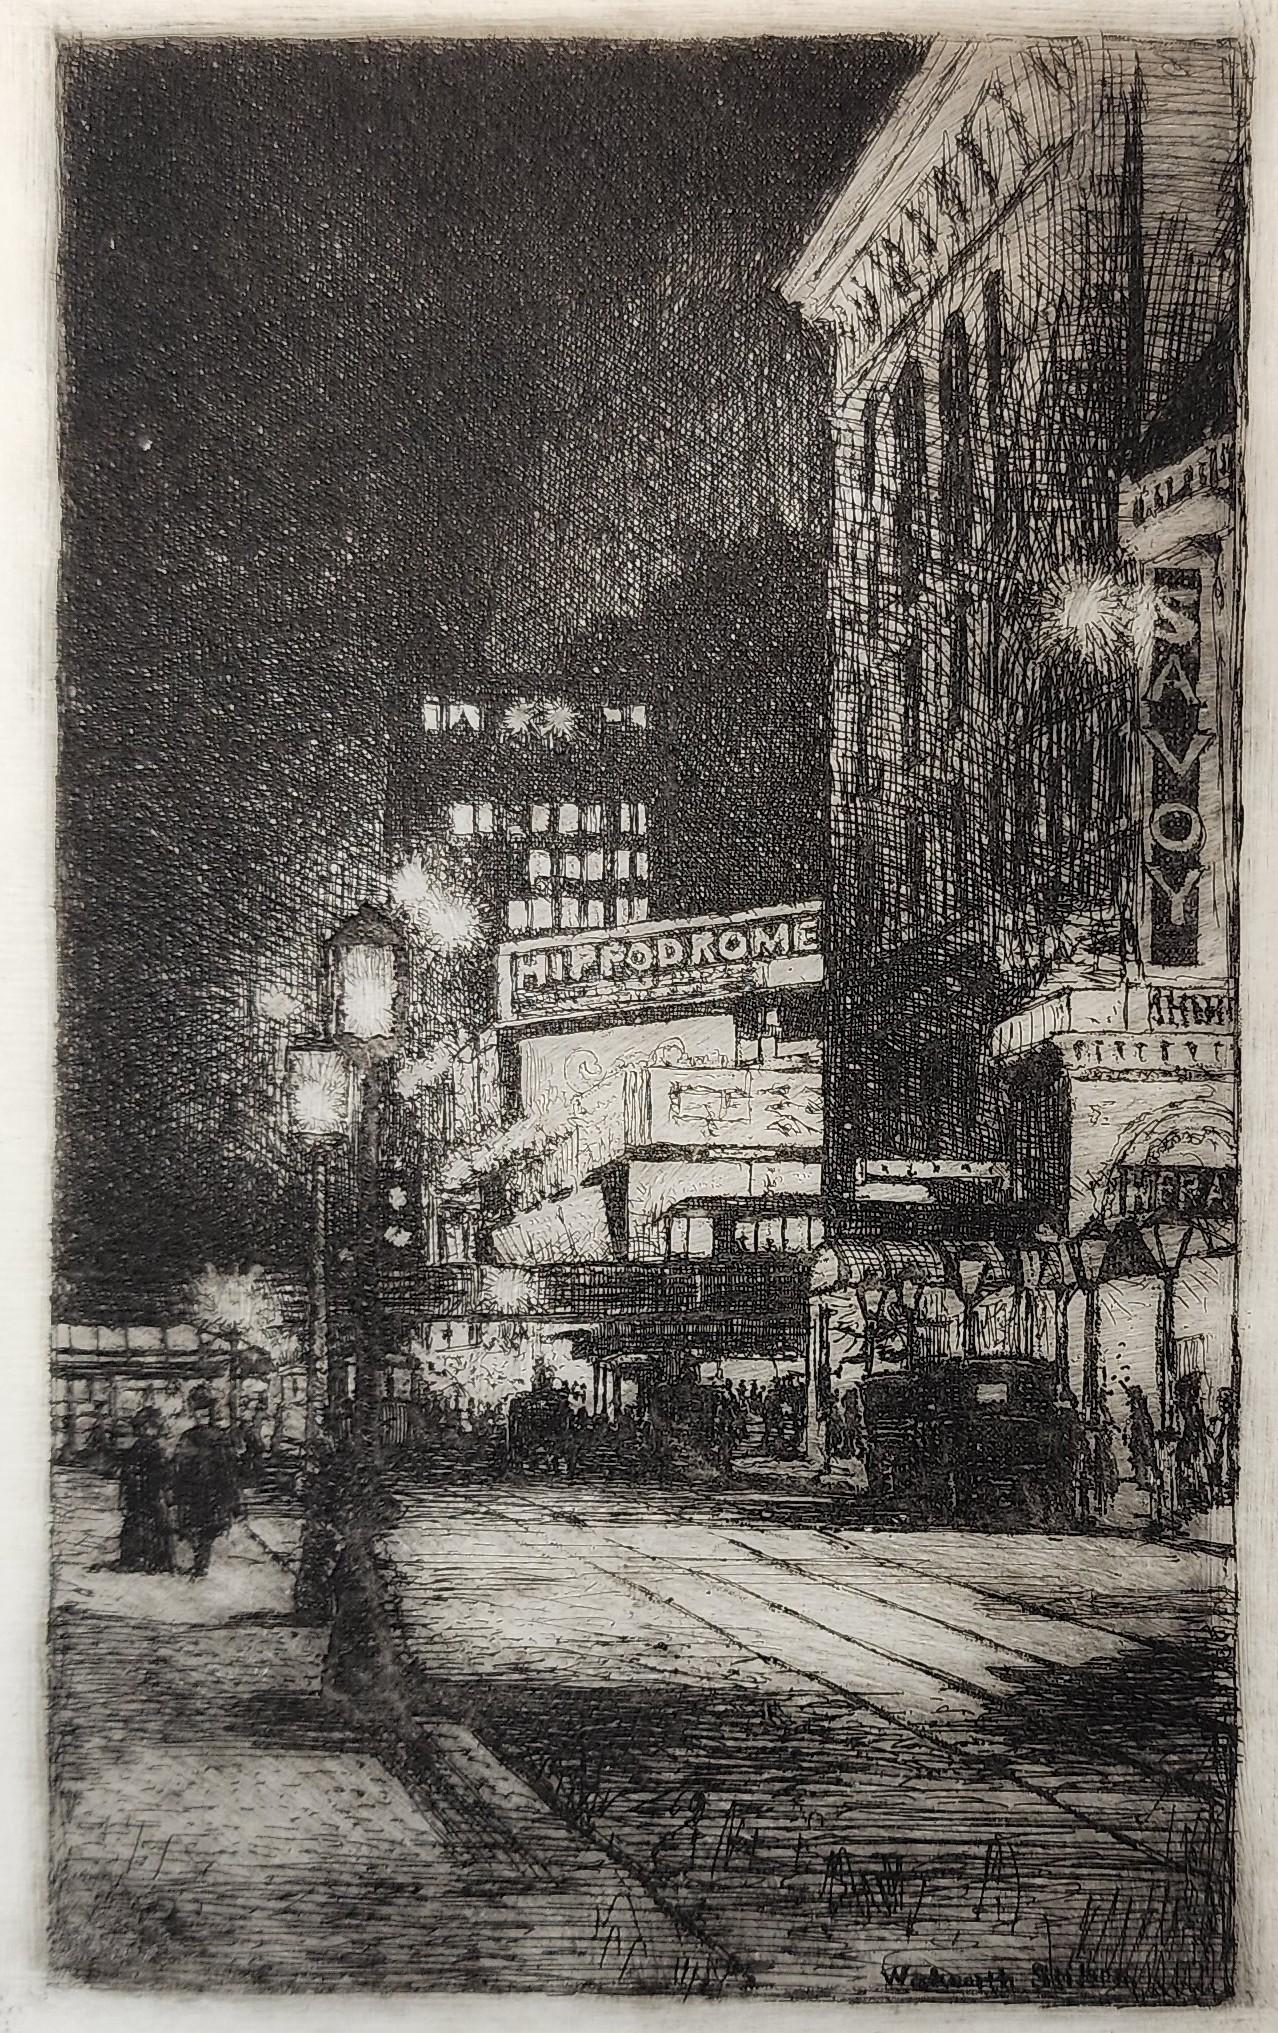  Hippodrome, gravure de 1910, Histoire de la ville de New York, NYC - Print de William Walworth Stilson